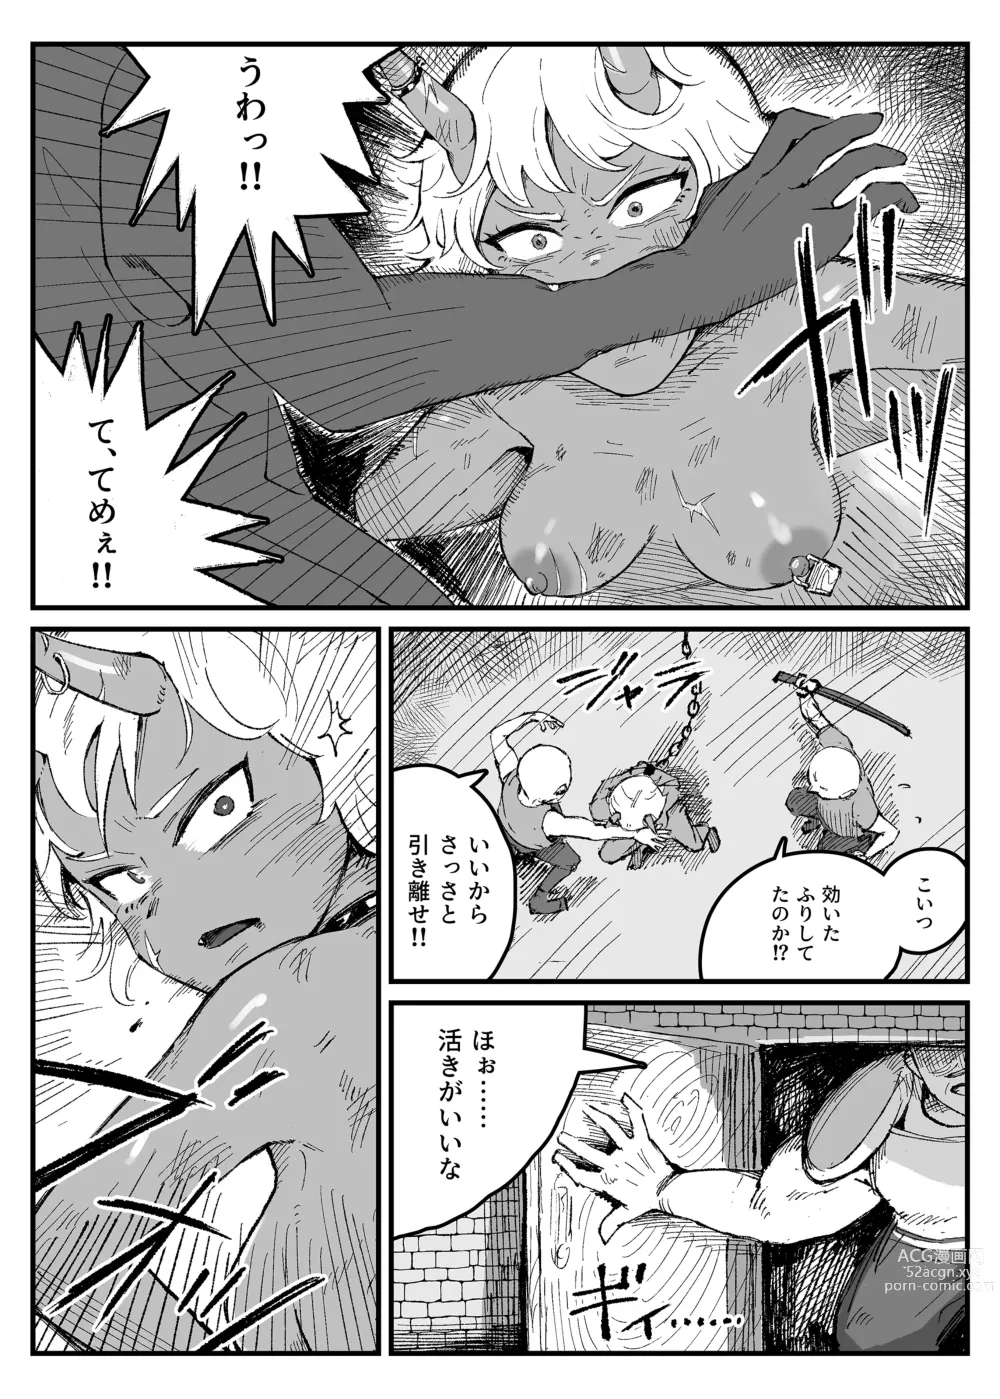 Page 2 of doujinshi Ogress instinct